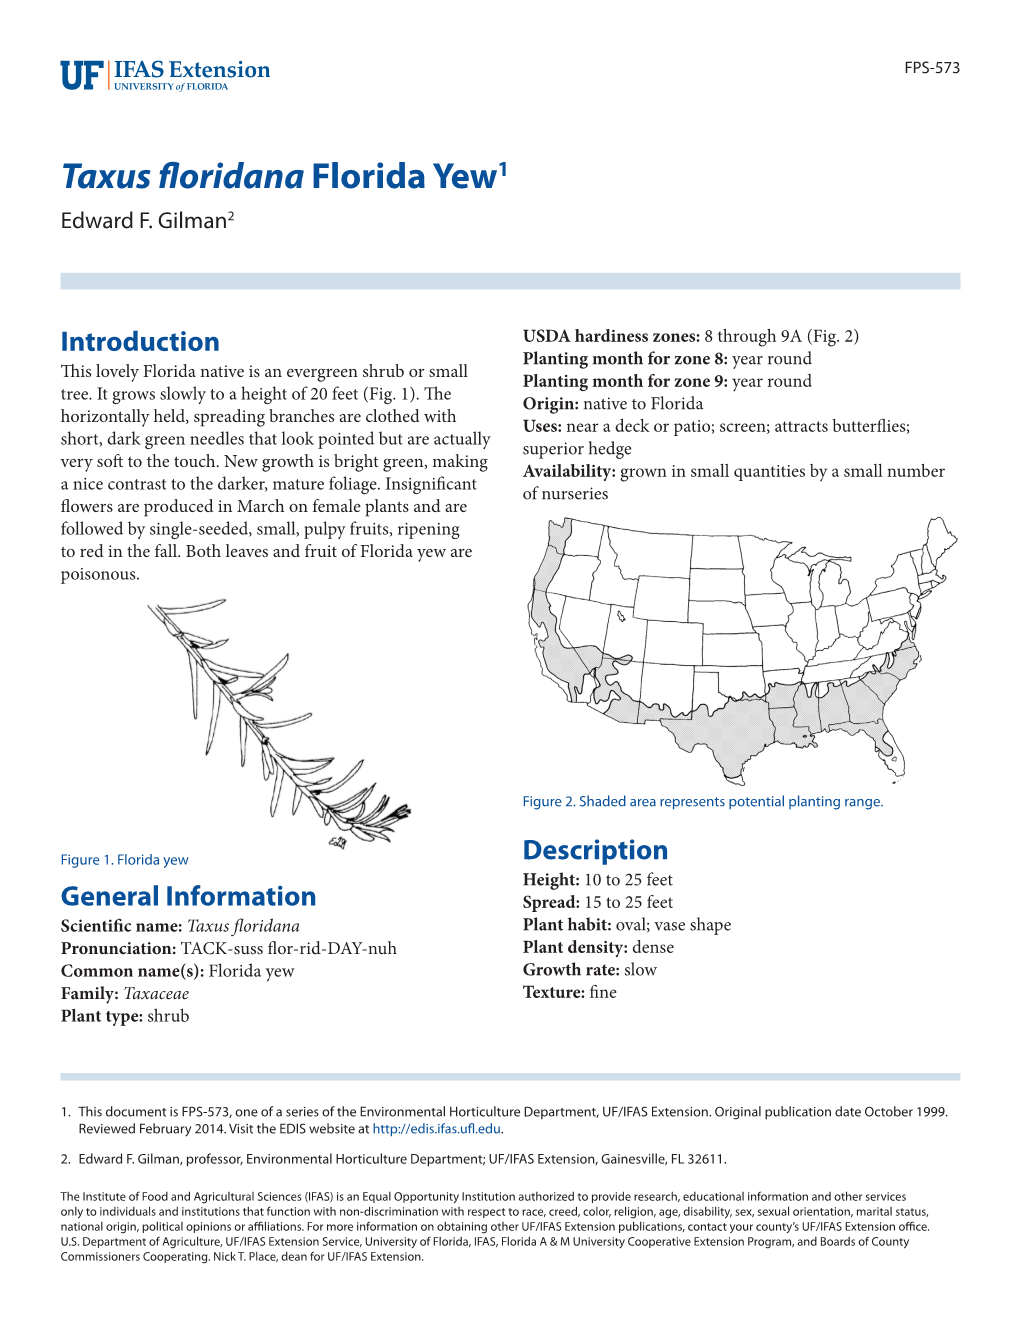 Taxus Floridana Florida Yew1